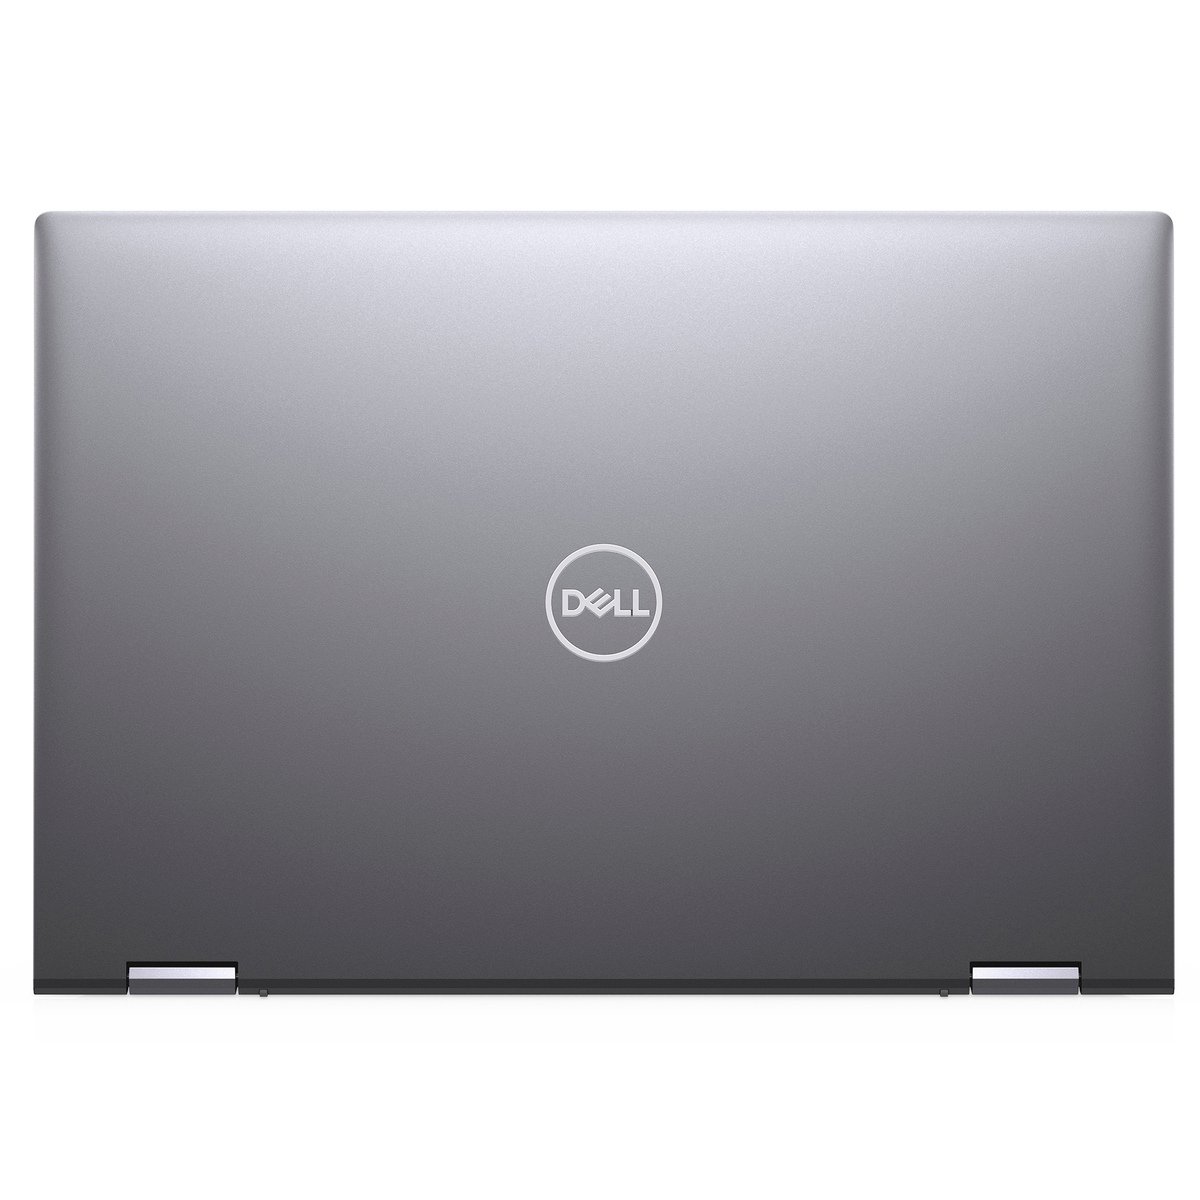 Dell Inspiron 14 (5406-INS-5009-GRY)2in1 Laptop,Intel i5 1135G7 TGL-U,8GB RAM,256GB SSD,Intel Iris Xe UMA,14" FHD Touch Screen,Grey